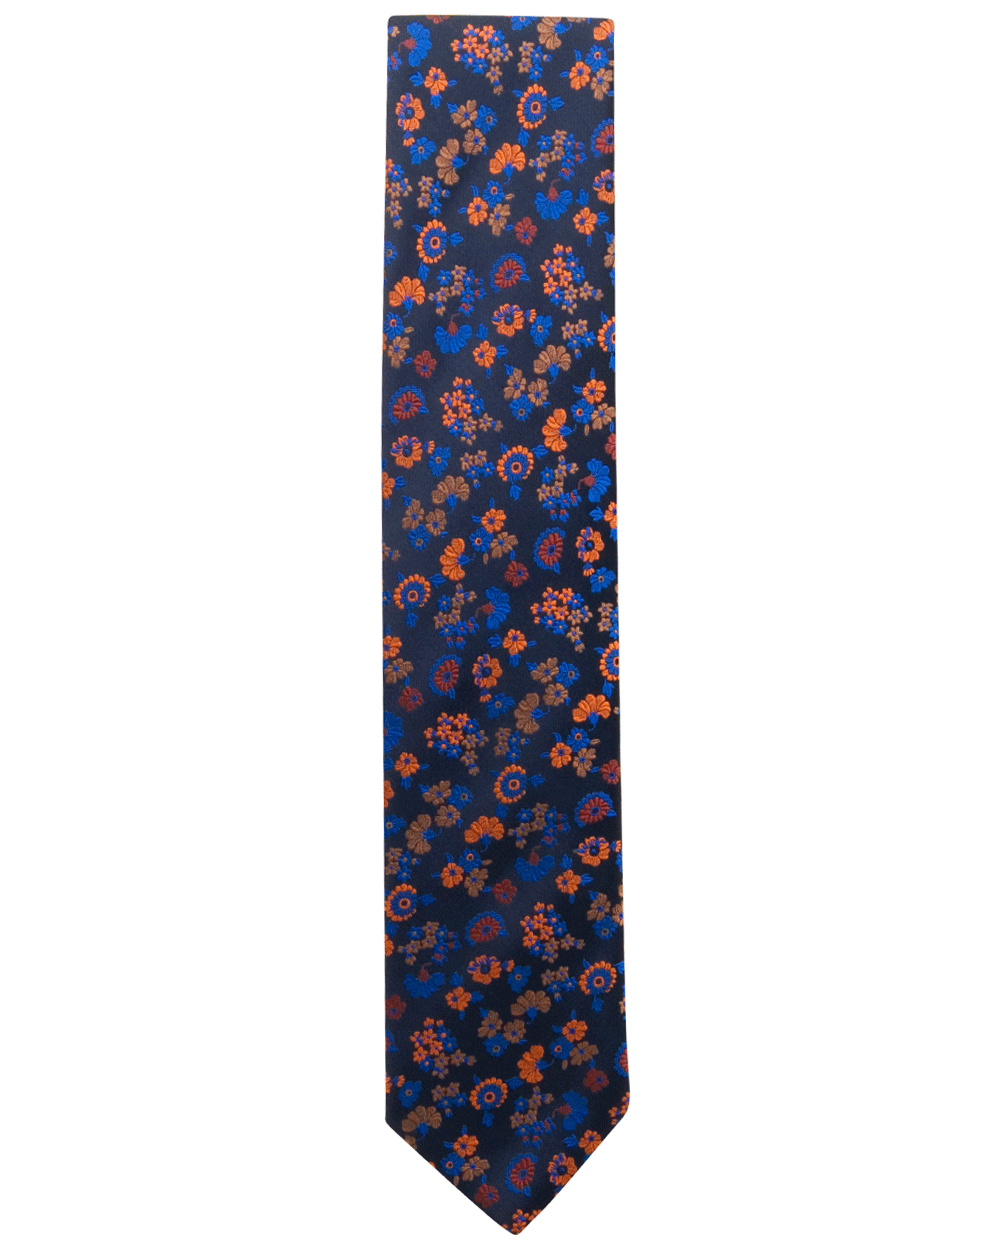 Blue and Orange Floral Tie